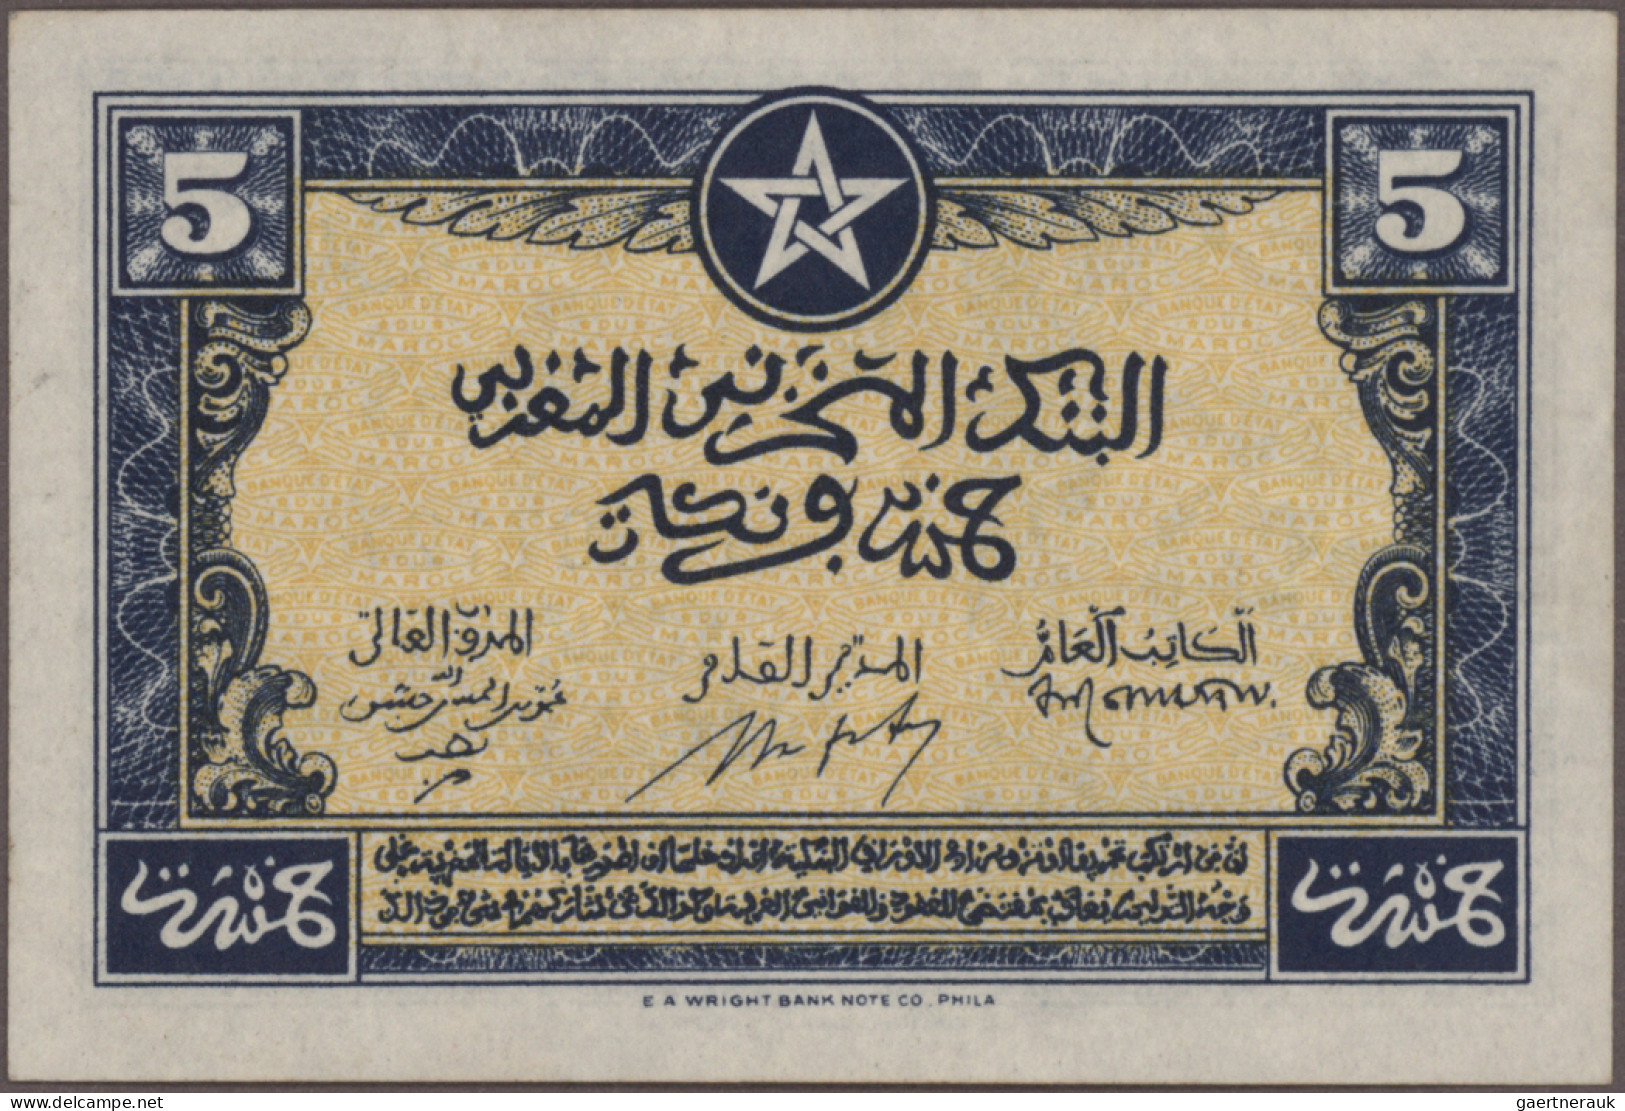 Morocco: Empire Cherifien and Banque d'État du Maroc, lot with 12 banknotes, ser